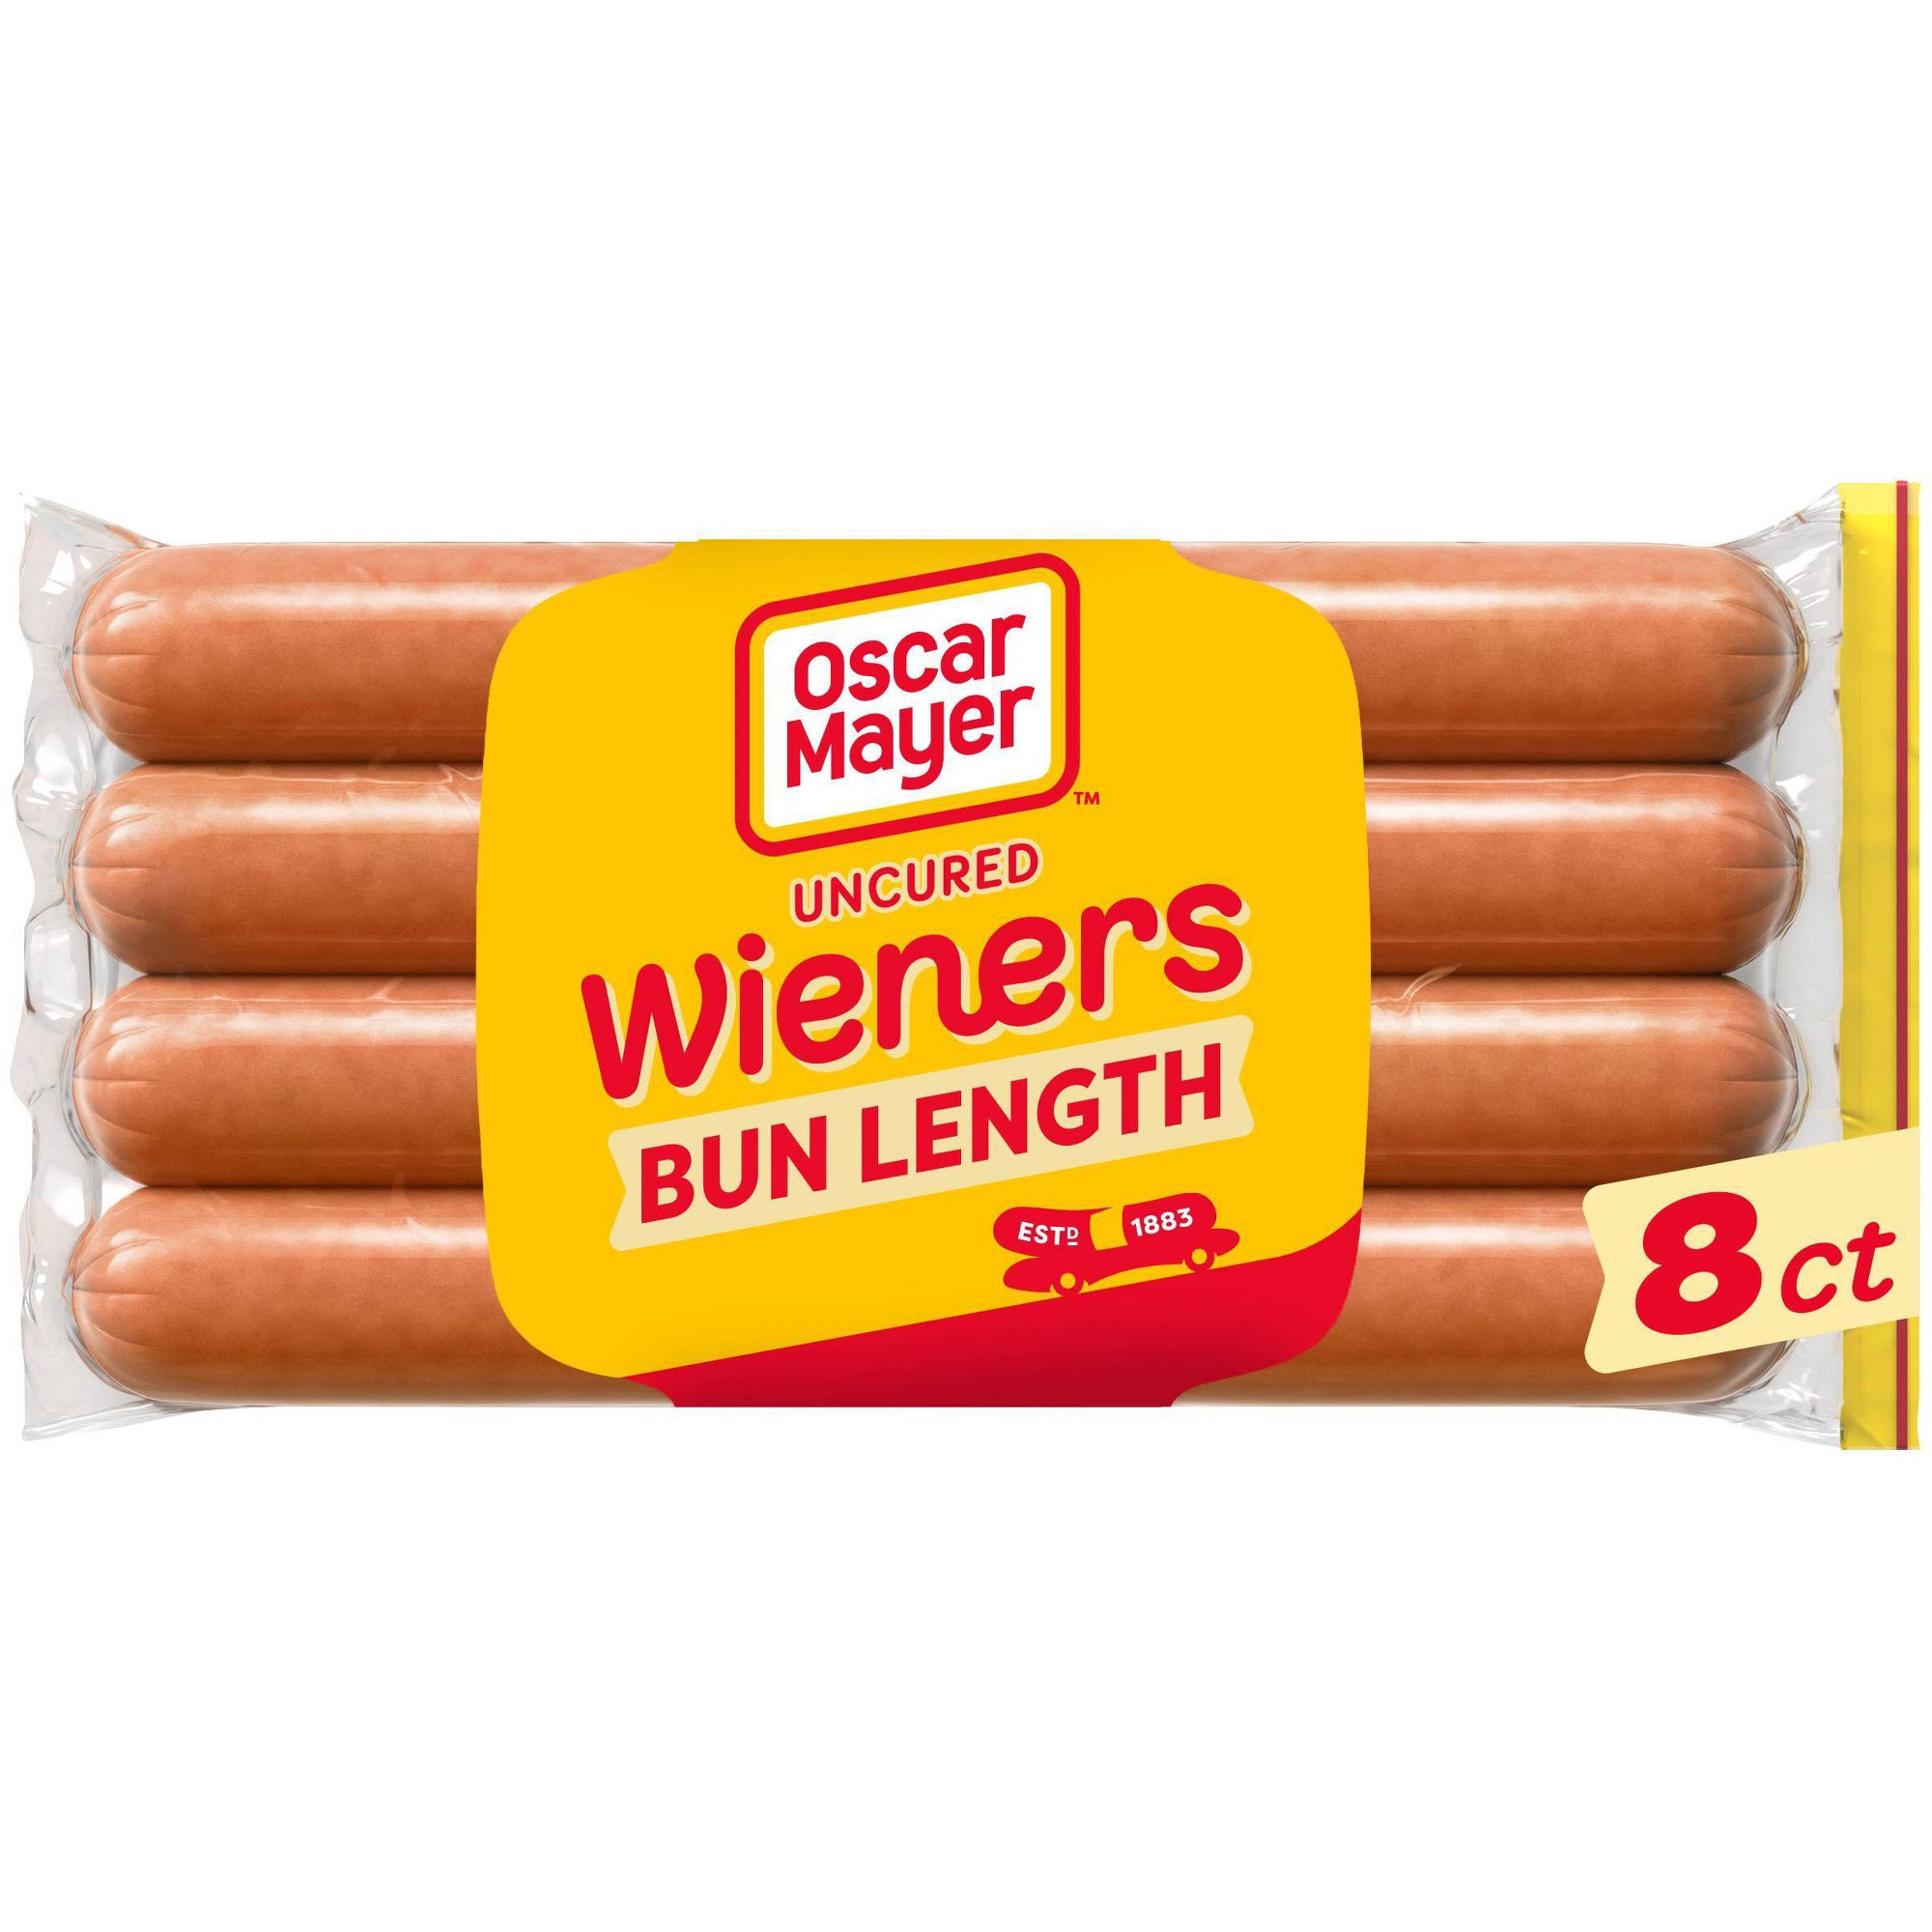 Oscar Mayer Classic Bun-Length Wieners